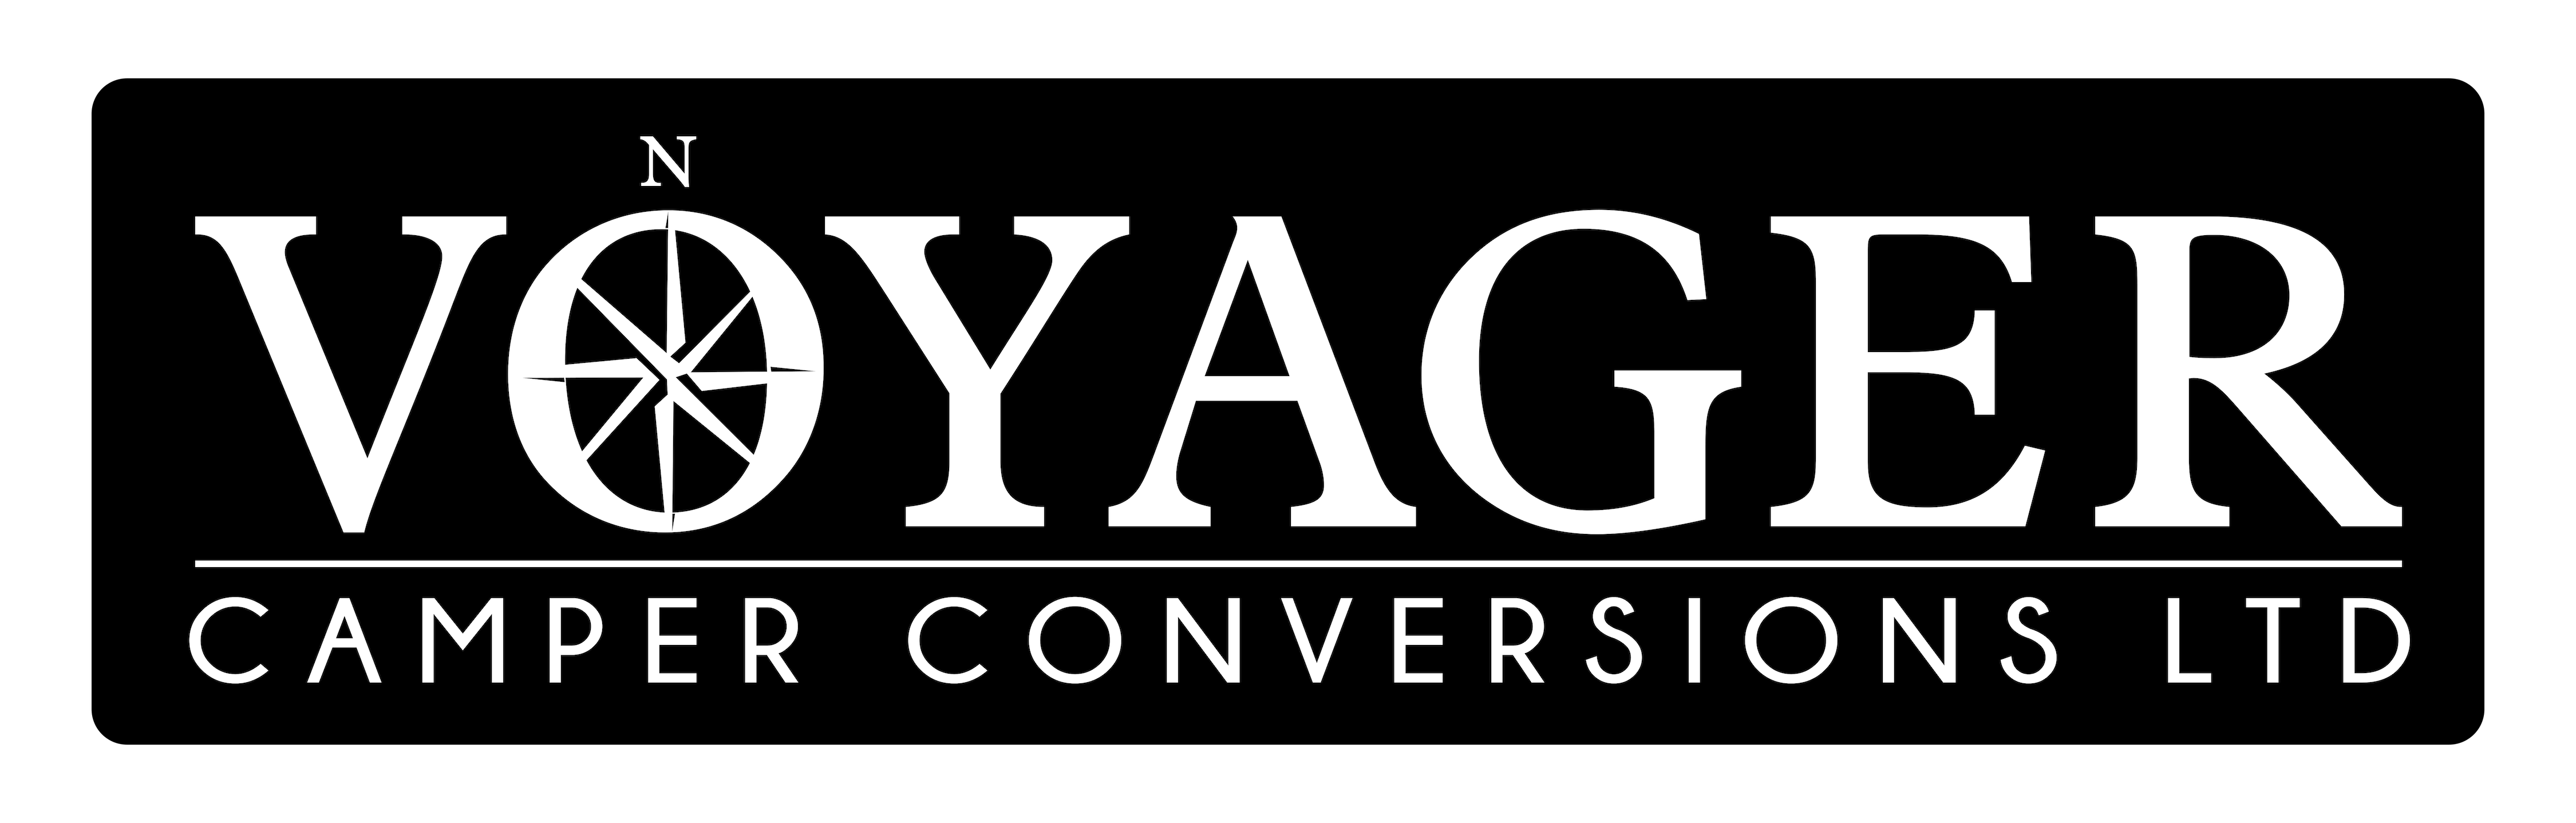 Voyager Camper Conversions